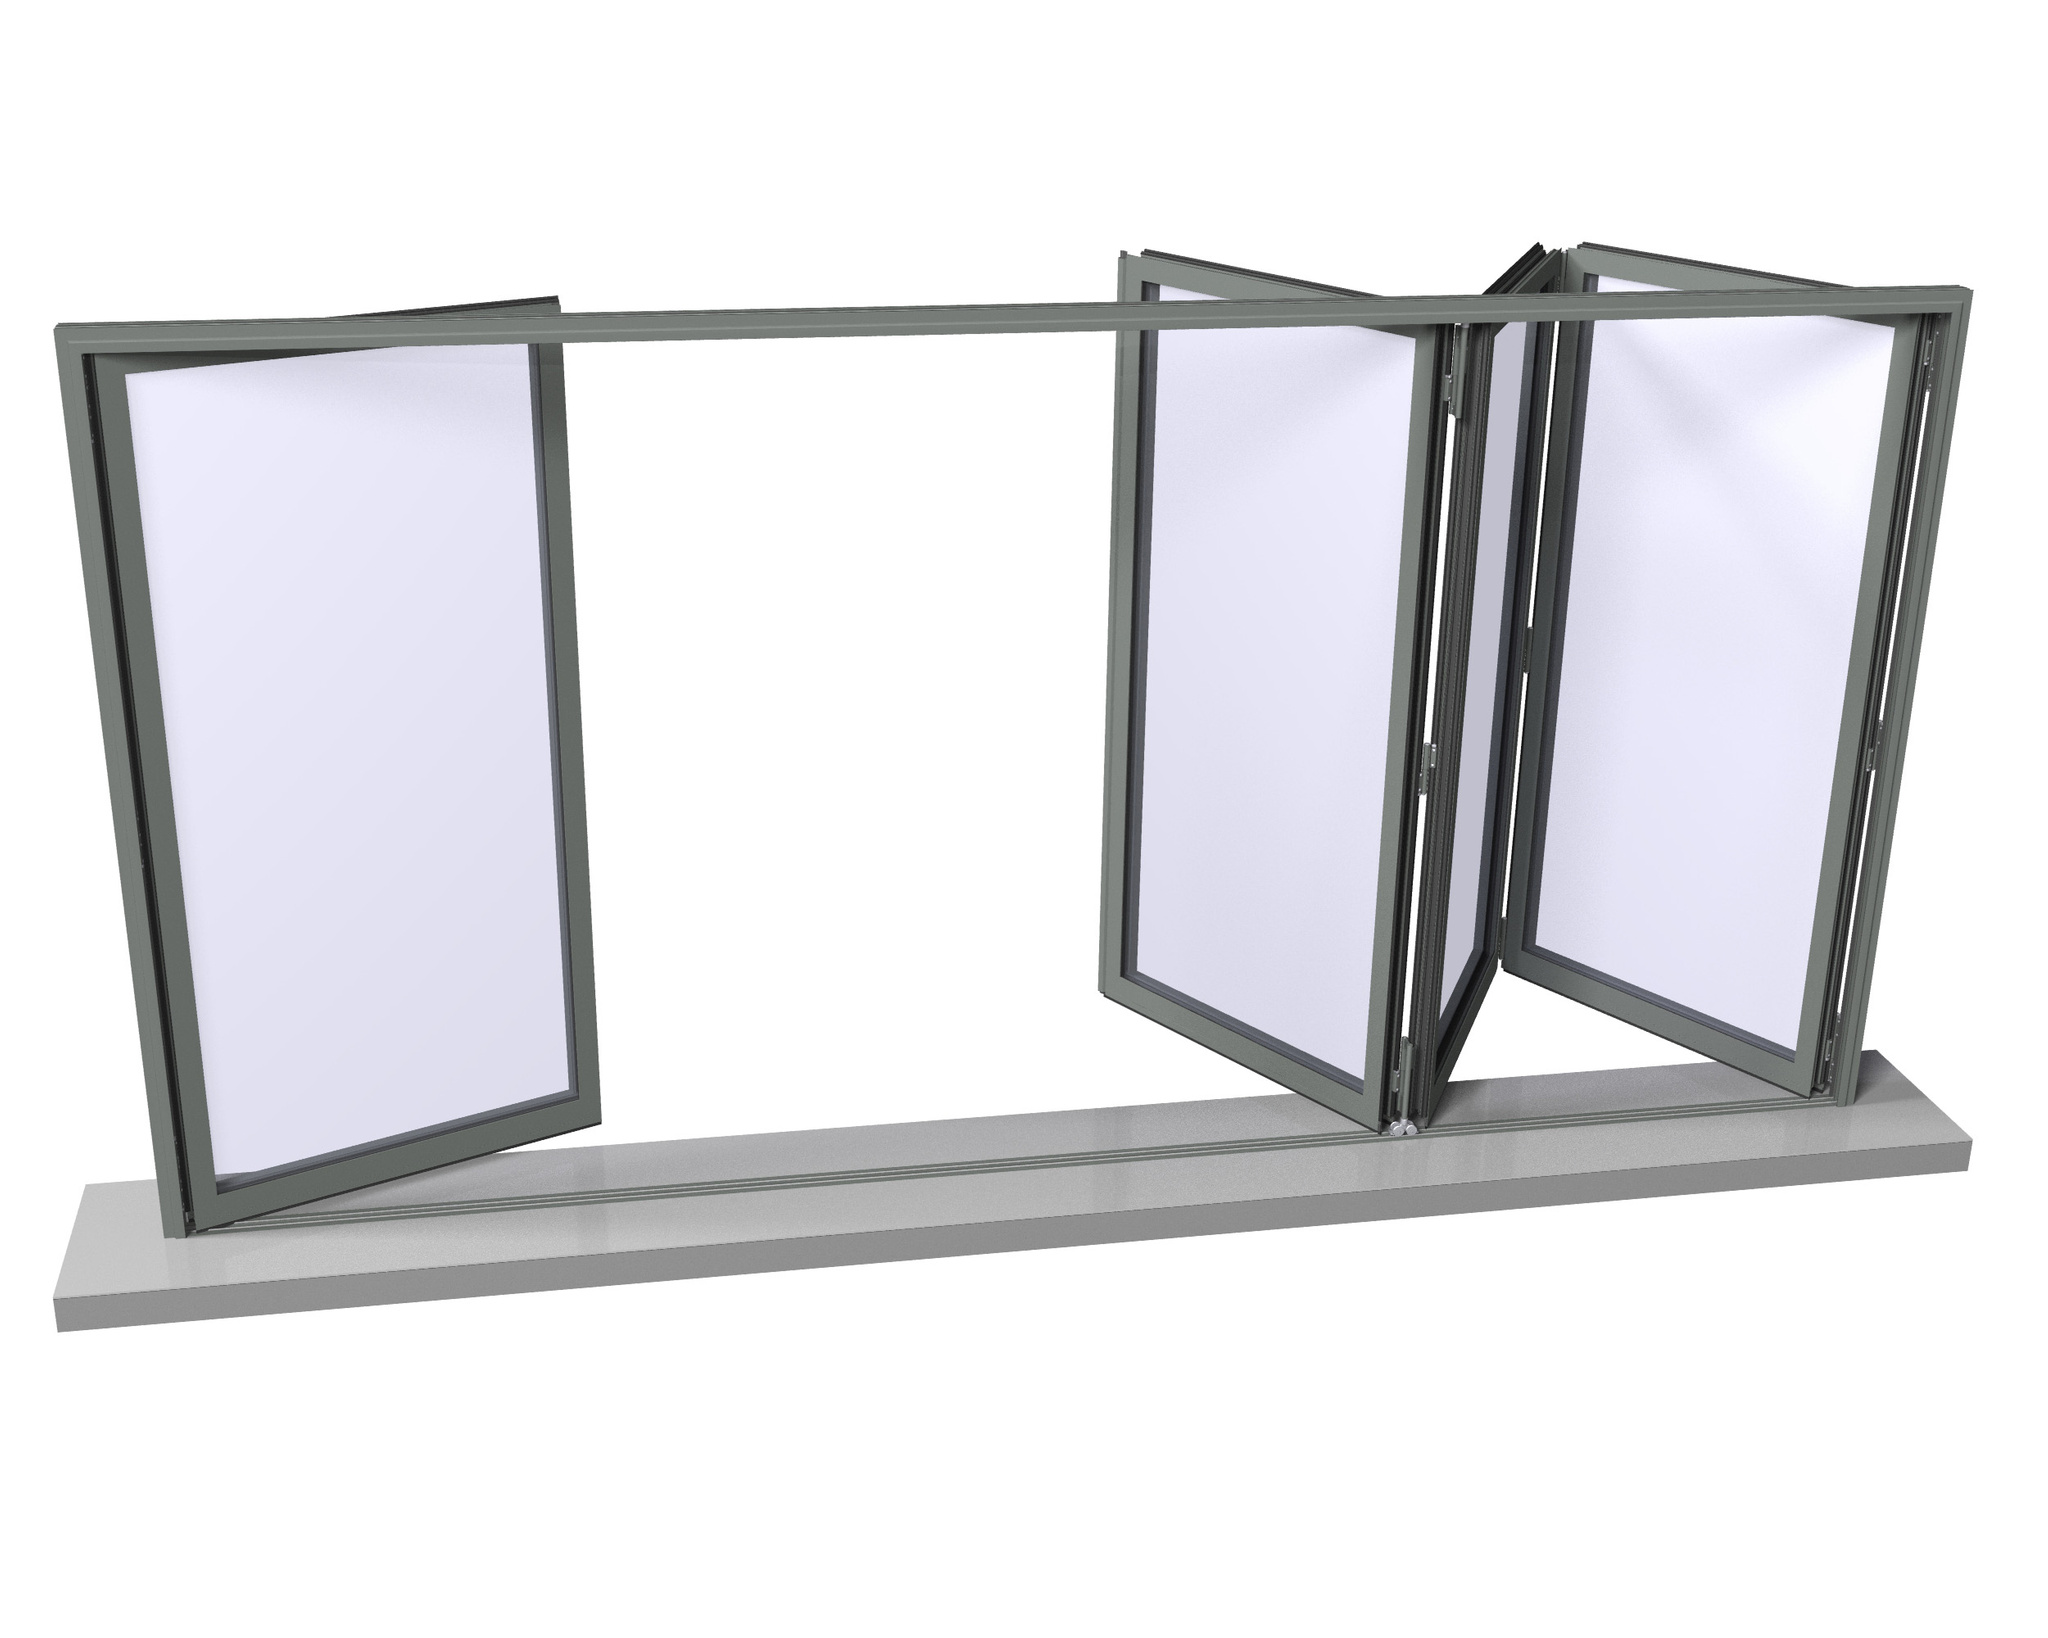 Reynaers-cf77-view - Aluminium windows and doors manufacturer UK - Profal Aluminium